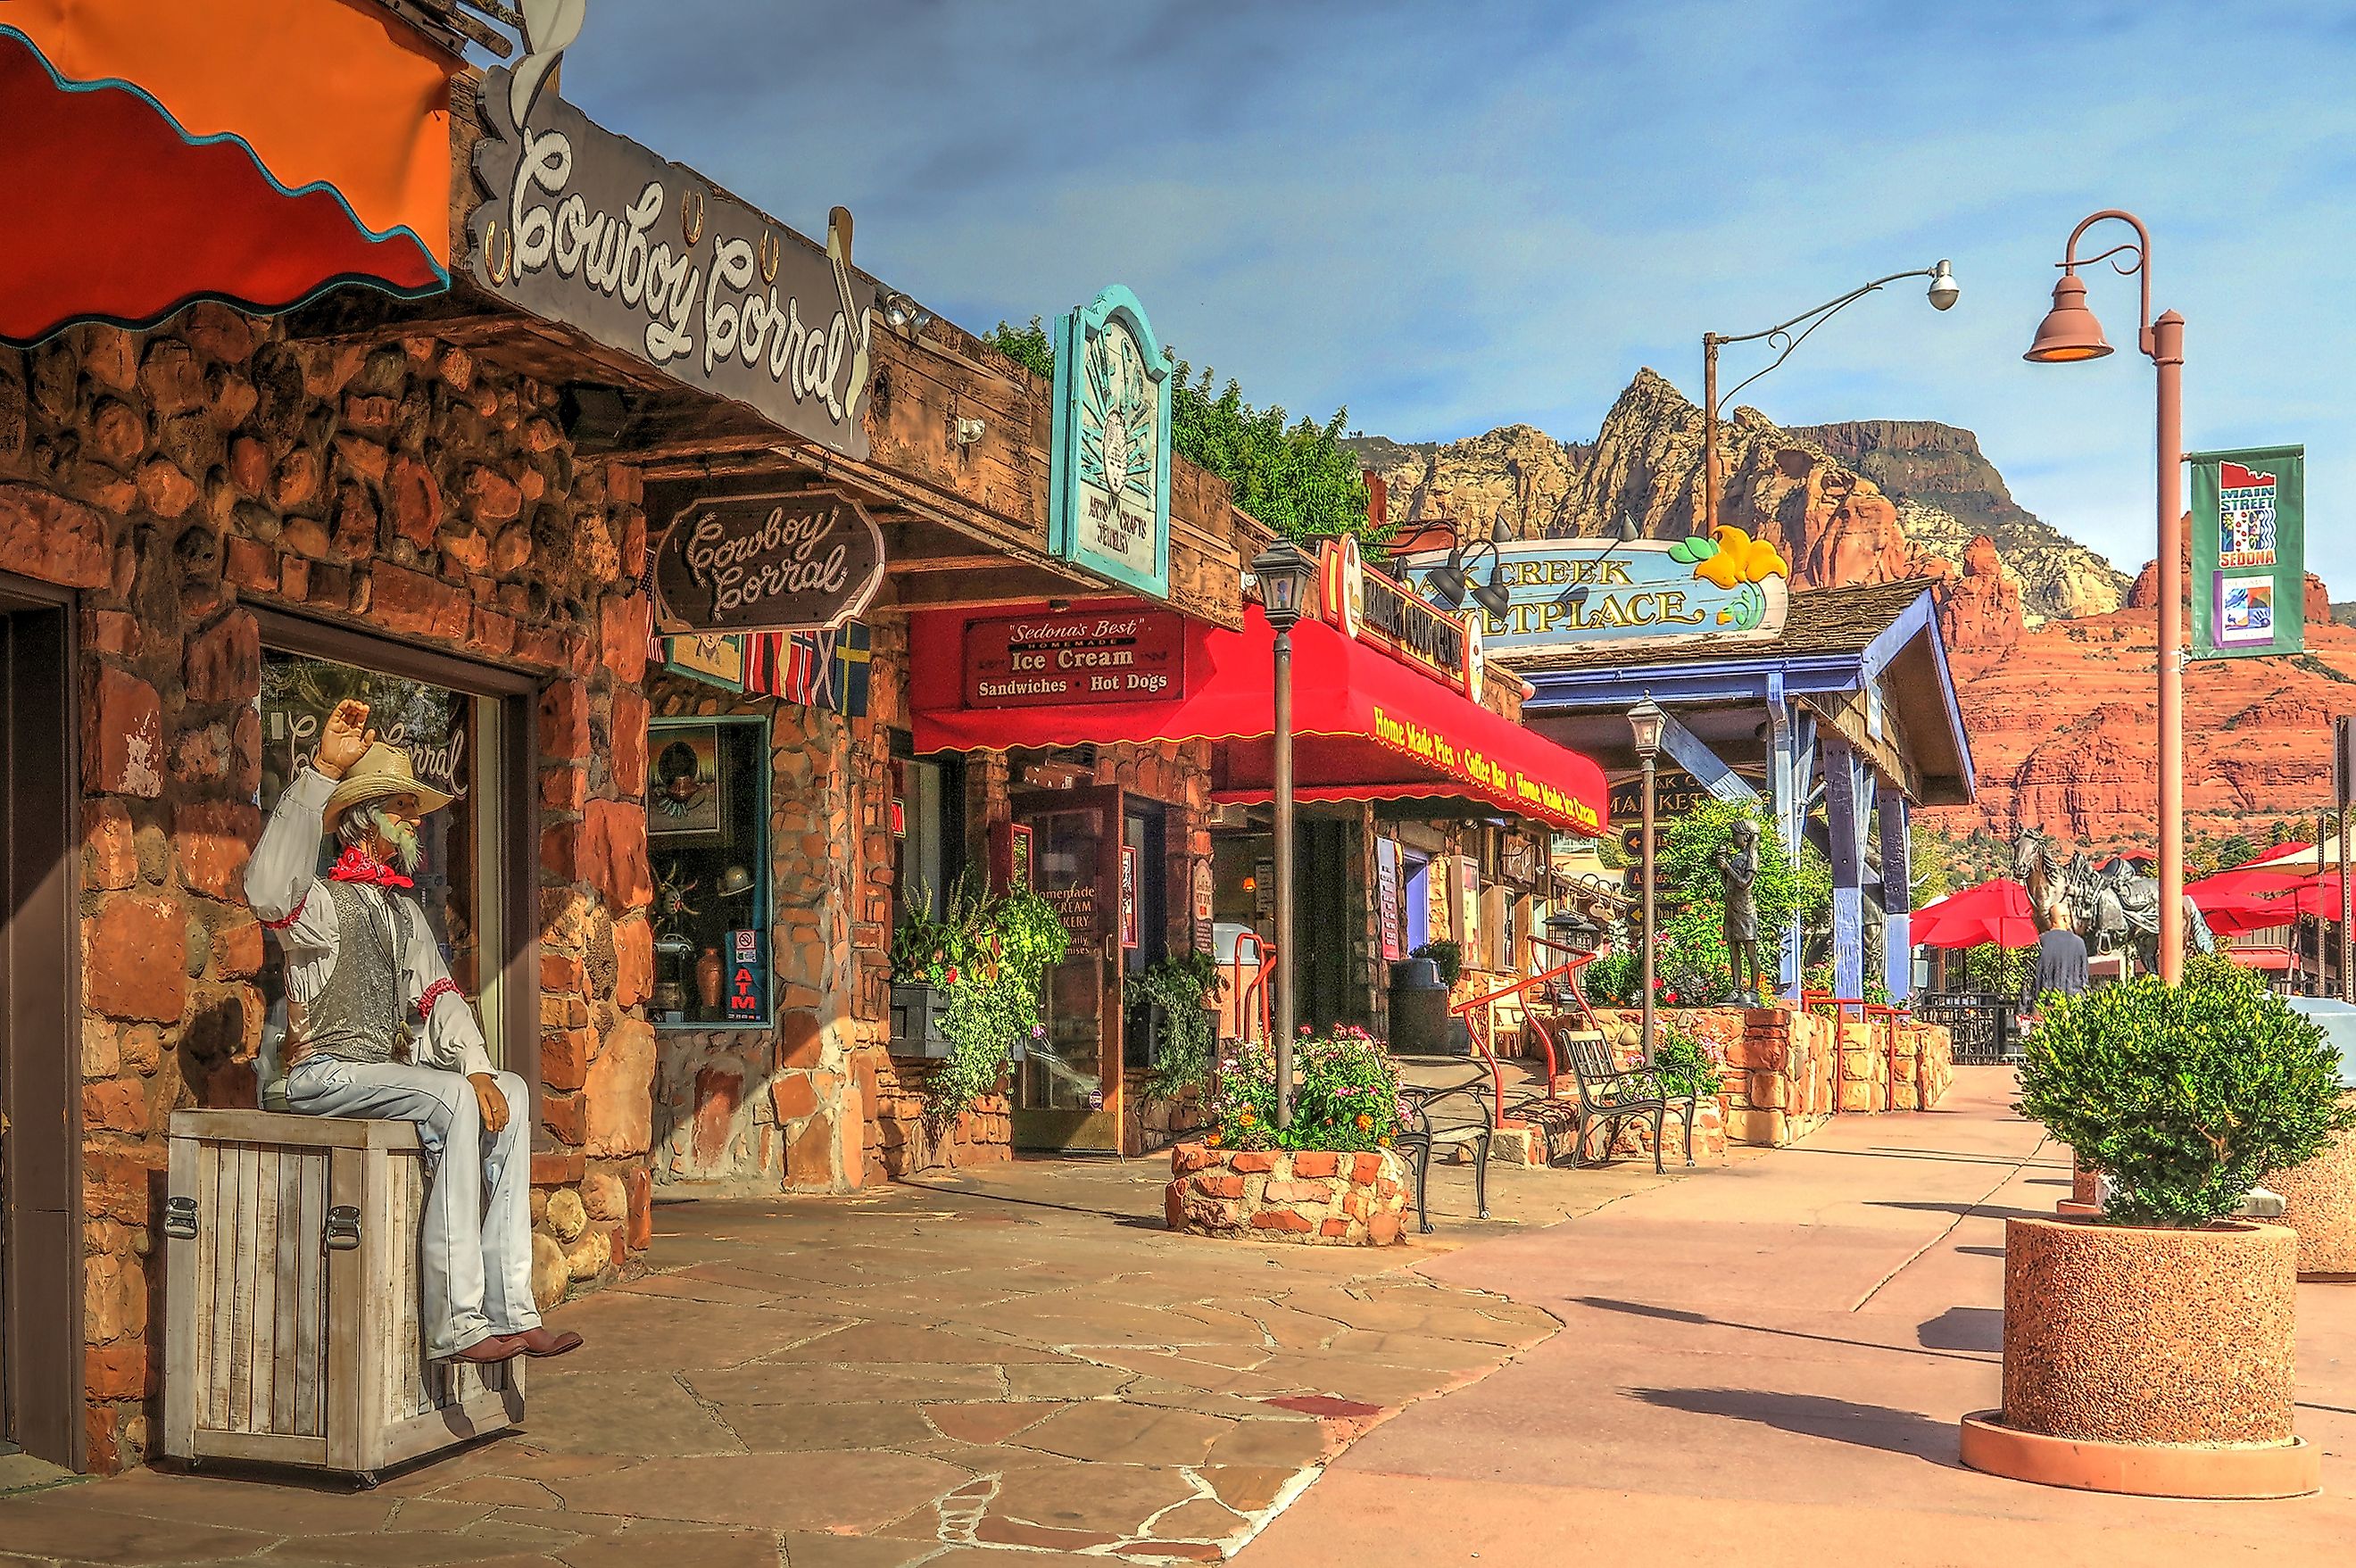 The vibrant town of Sedona, Arizona.